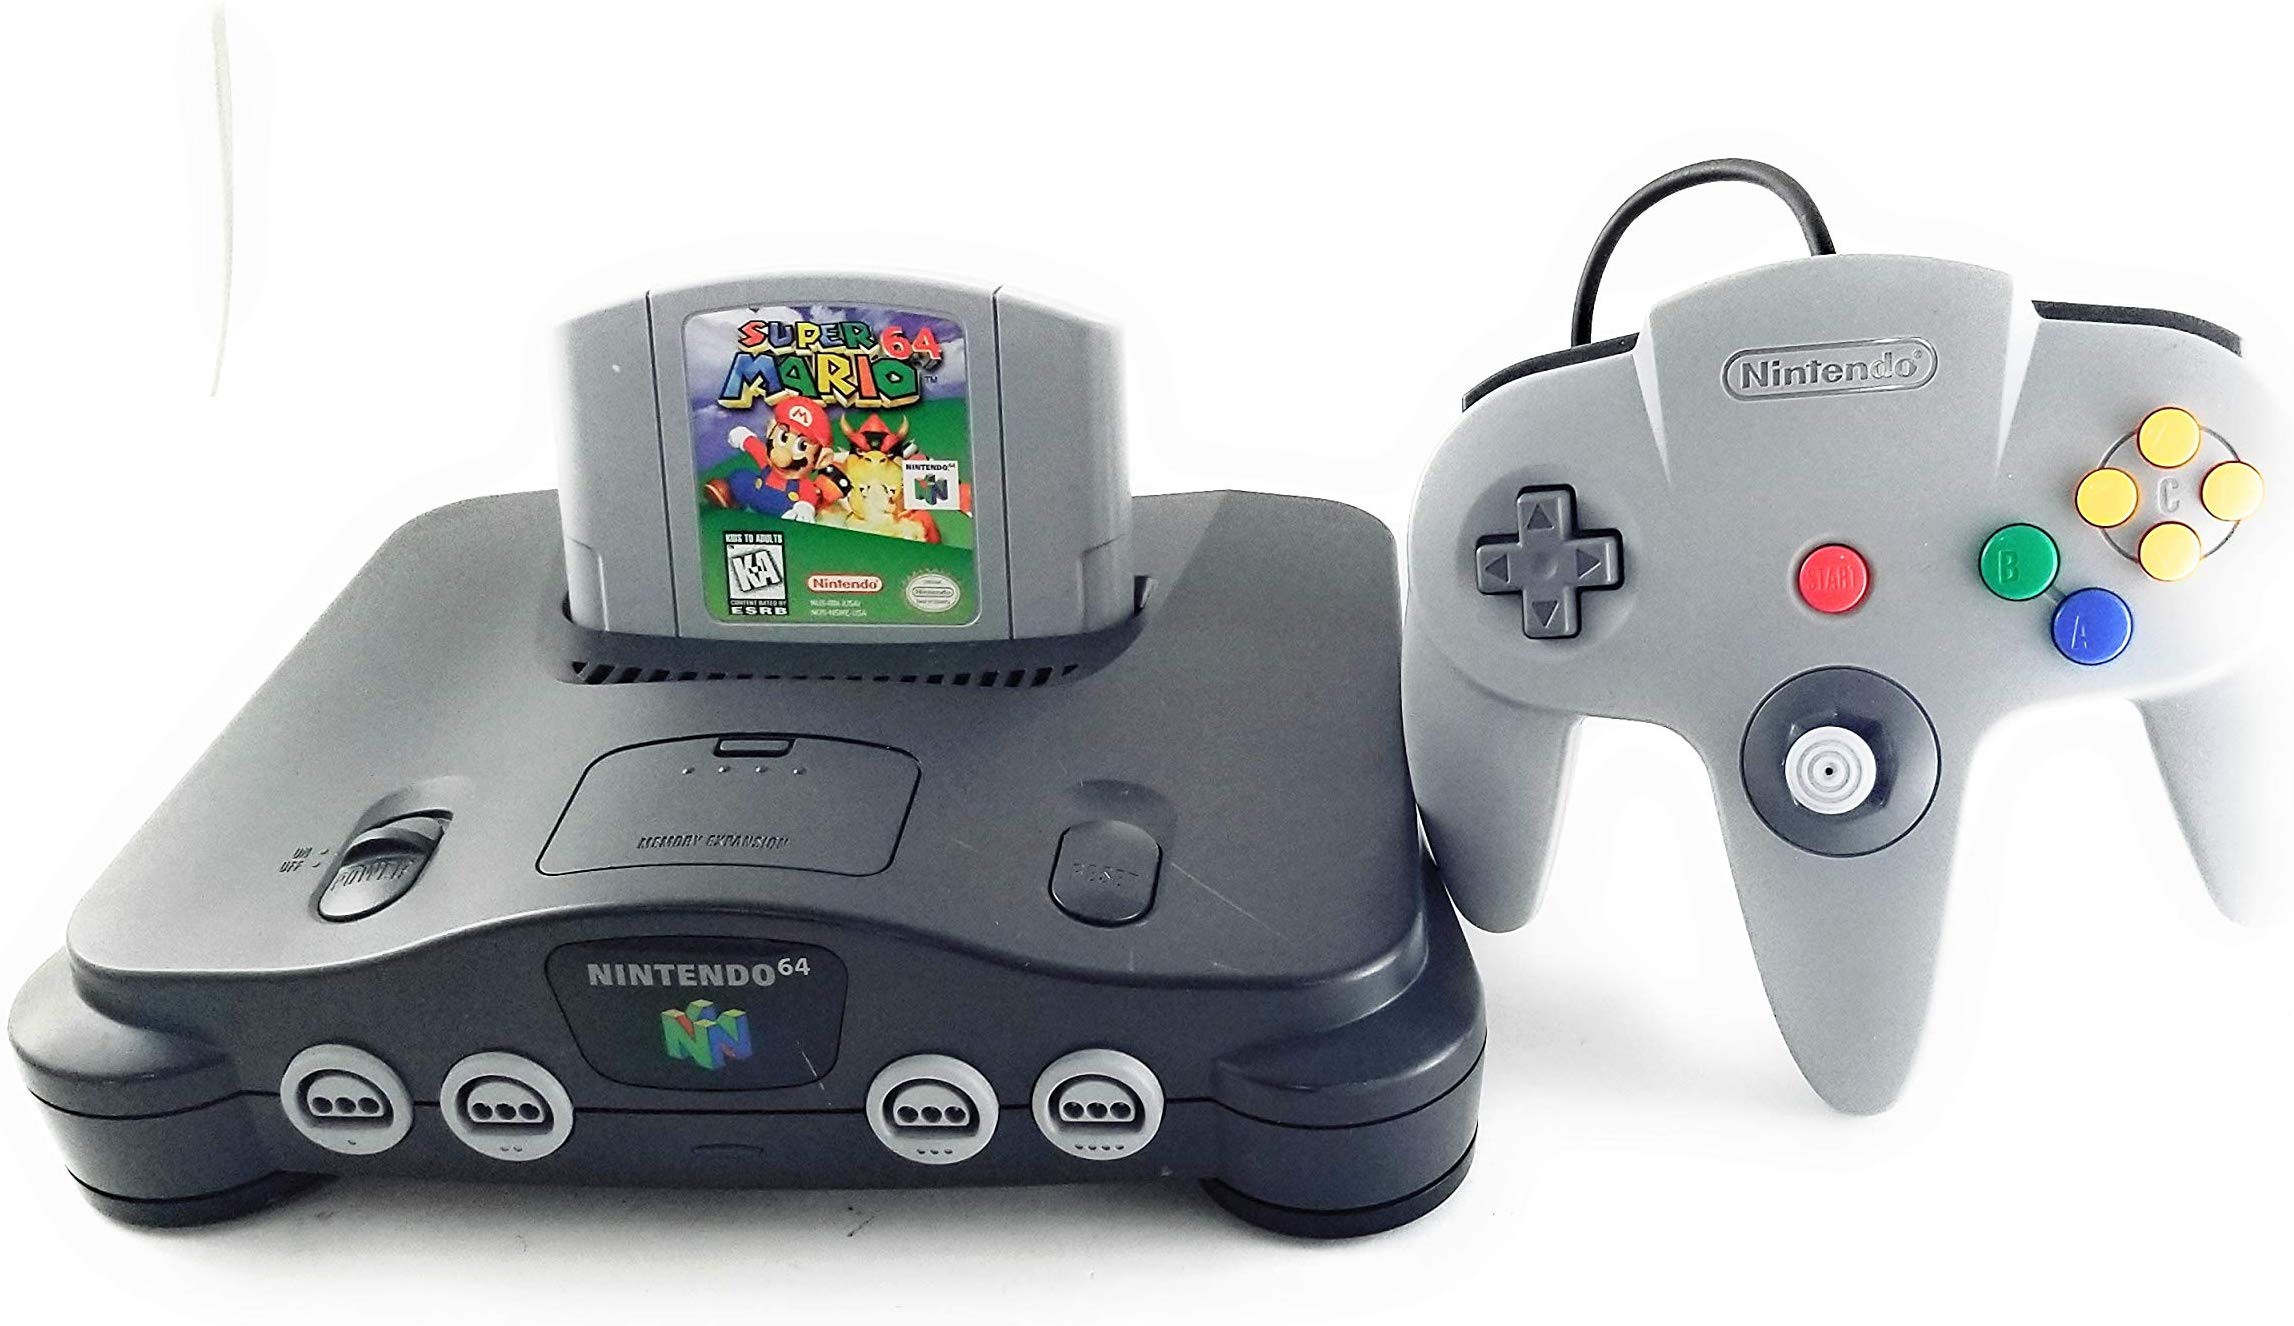  Nintendo 64 console with Mario 64 cartridge and controller